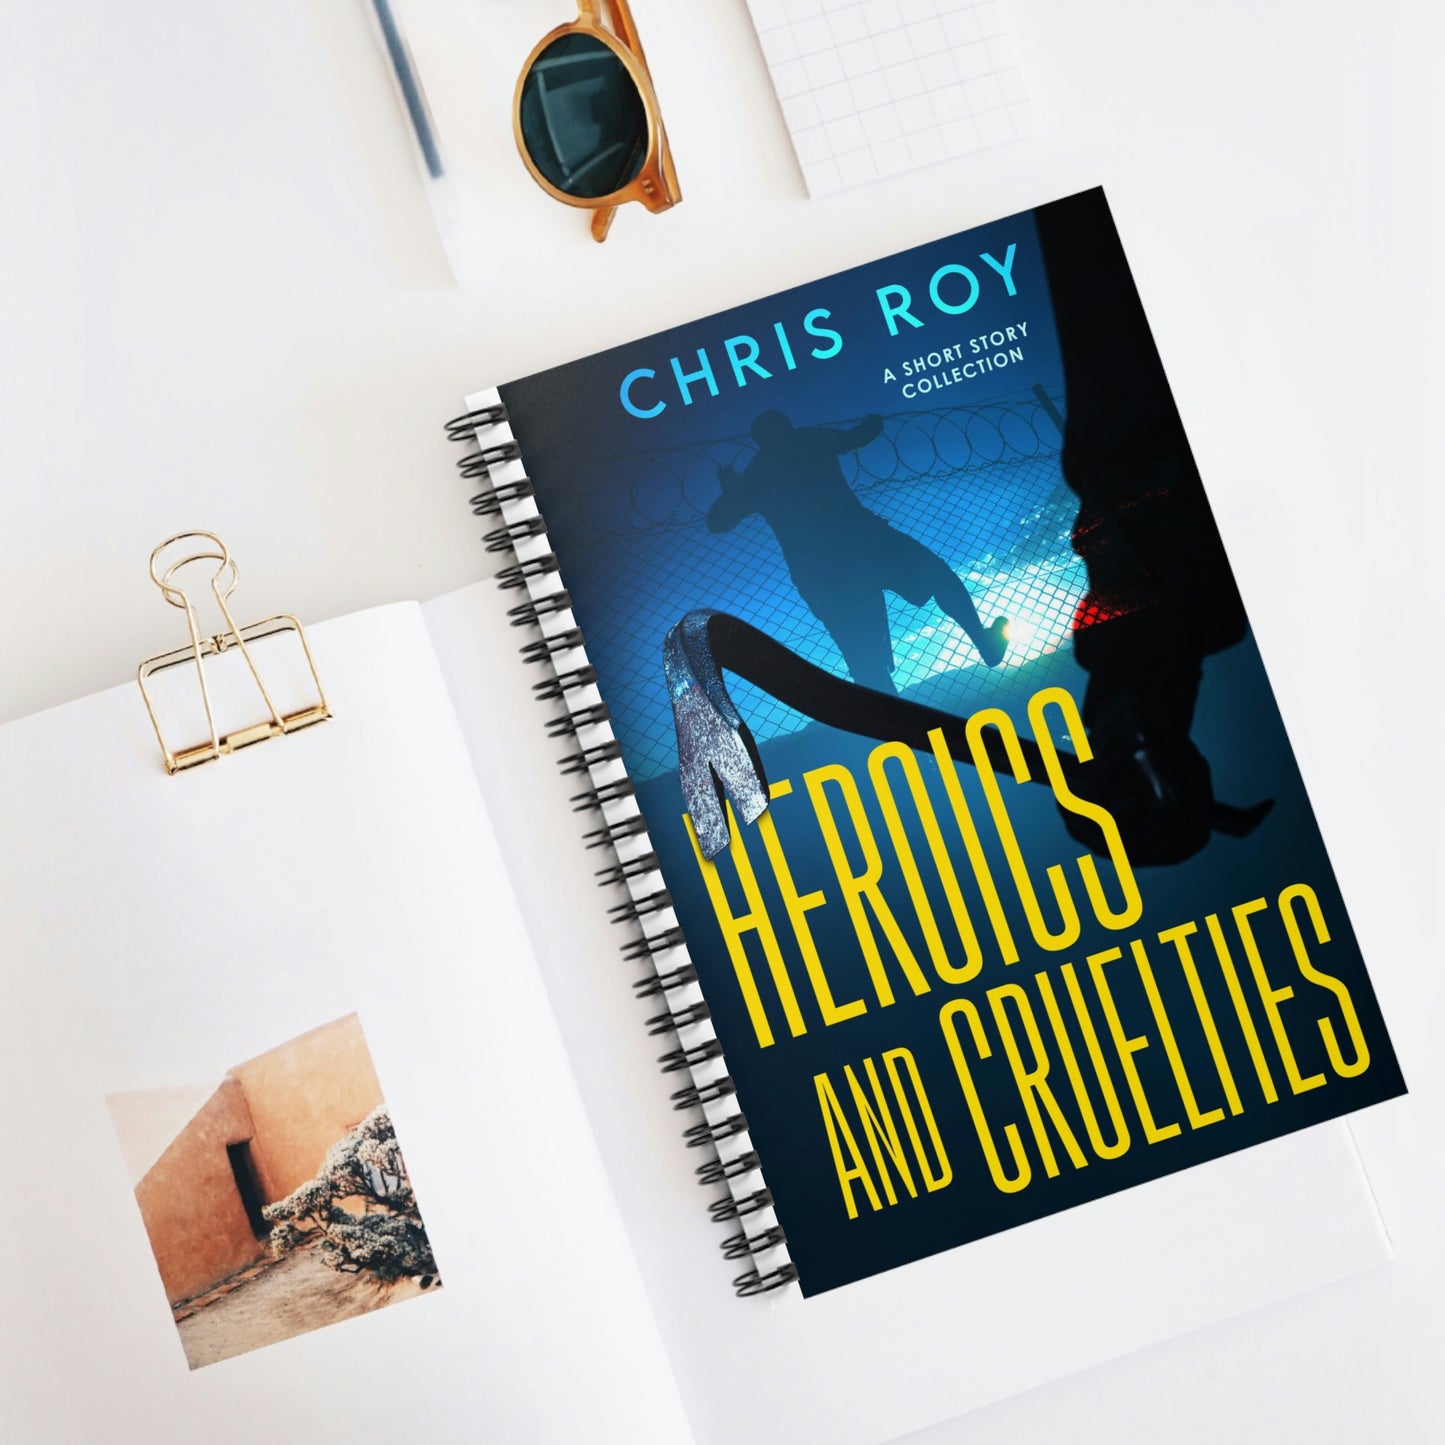 Heroics And Cruelties - Spiral Notebook